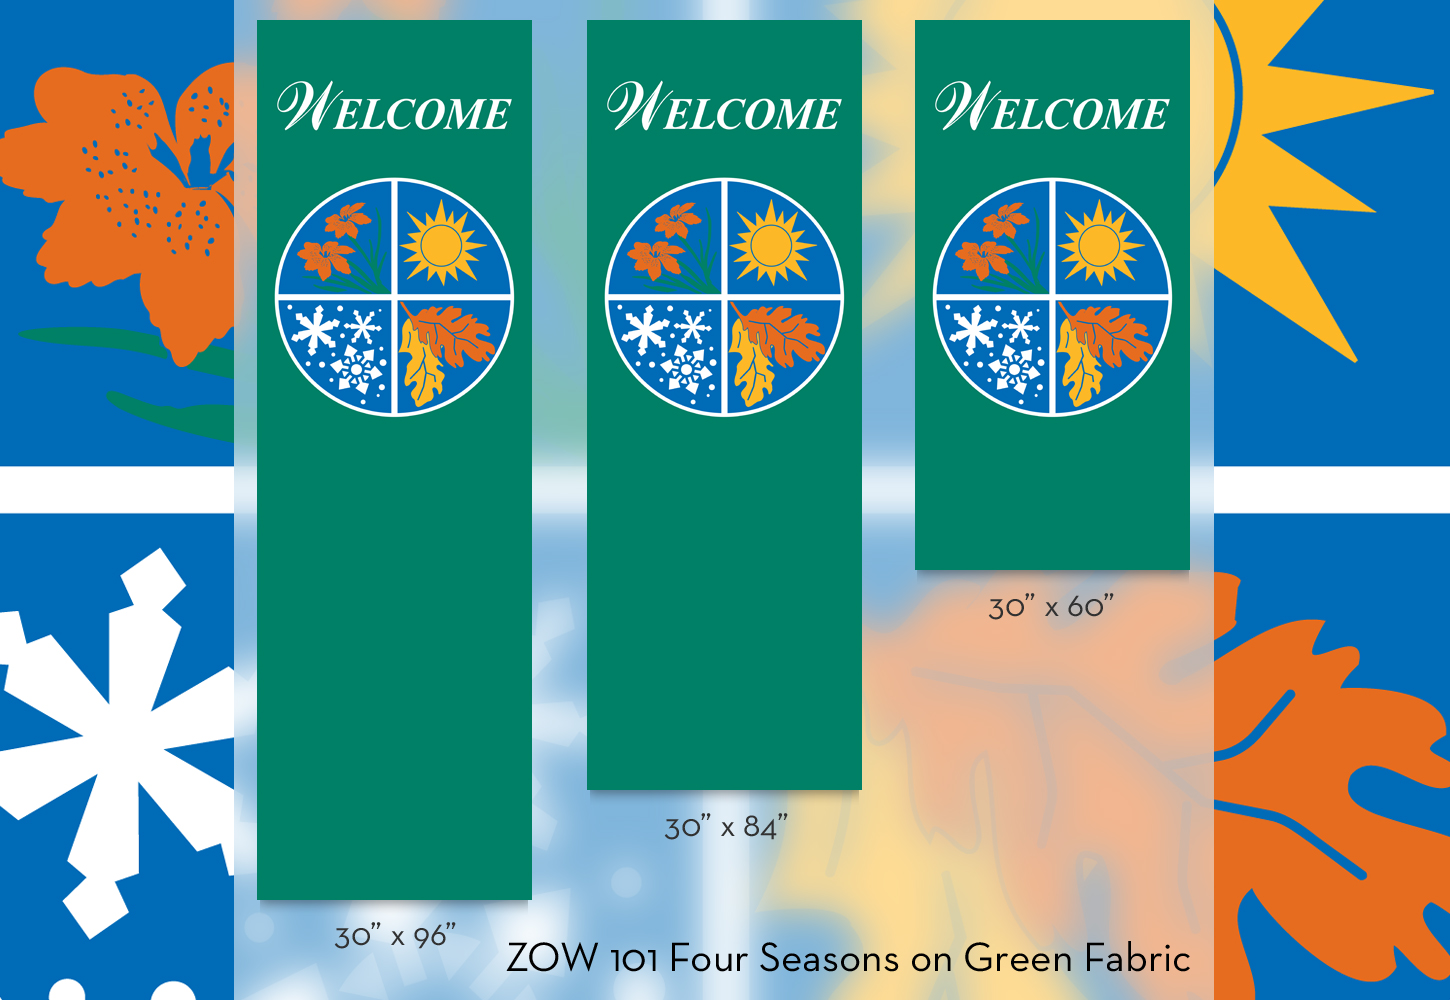 ZOW 101 Four Seasons on Green Fabric